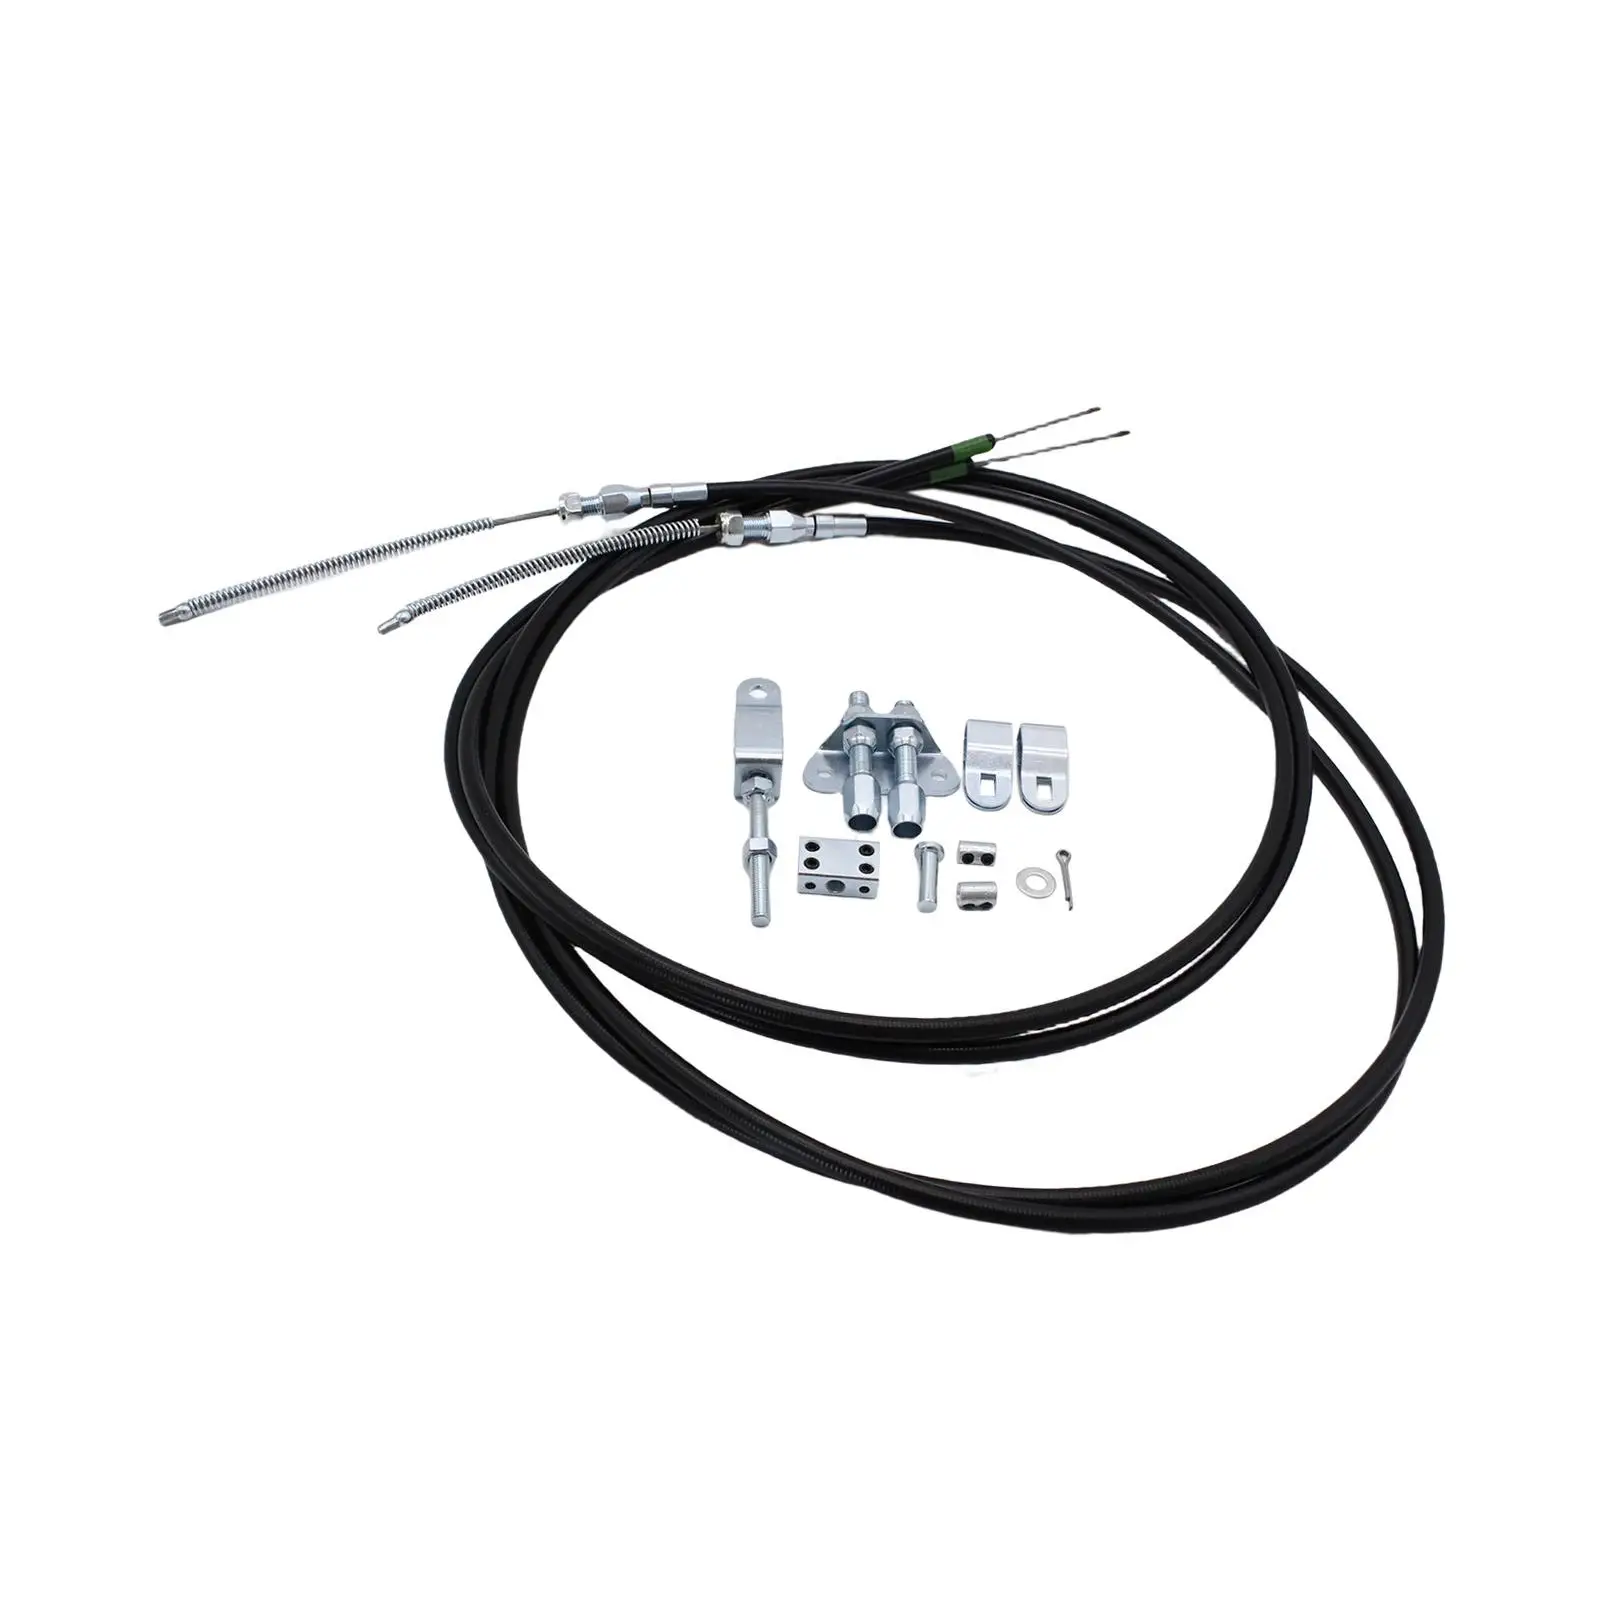 Universal Parking Brake Cable Kit 330-9371 Easily Install for Internal Drum Brake Assemblies